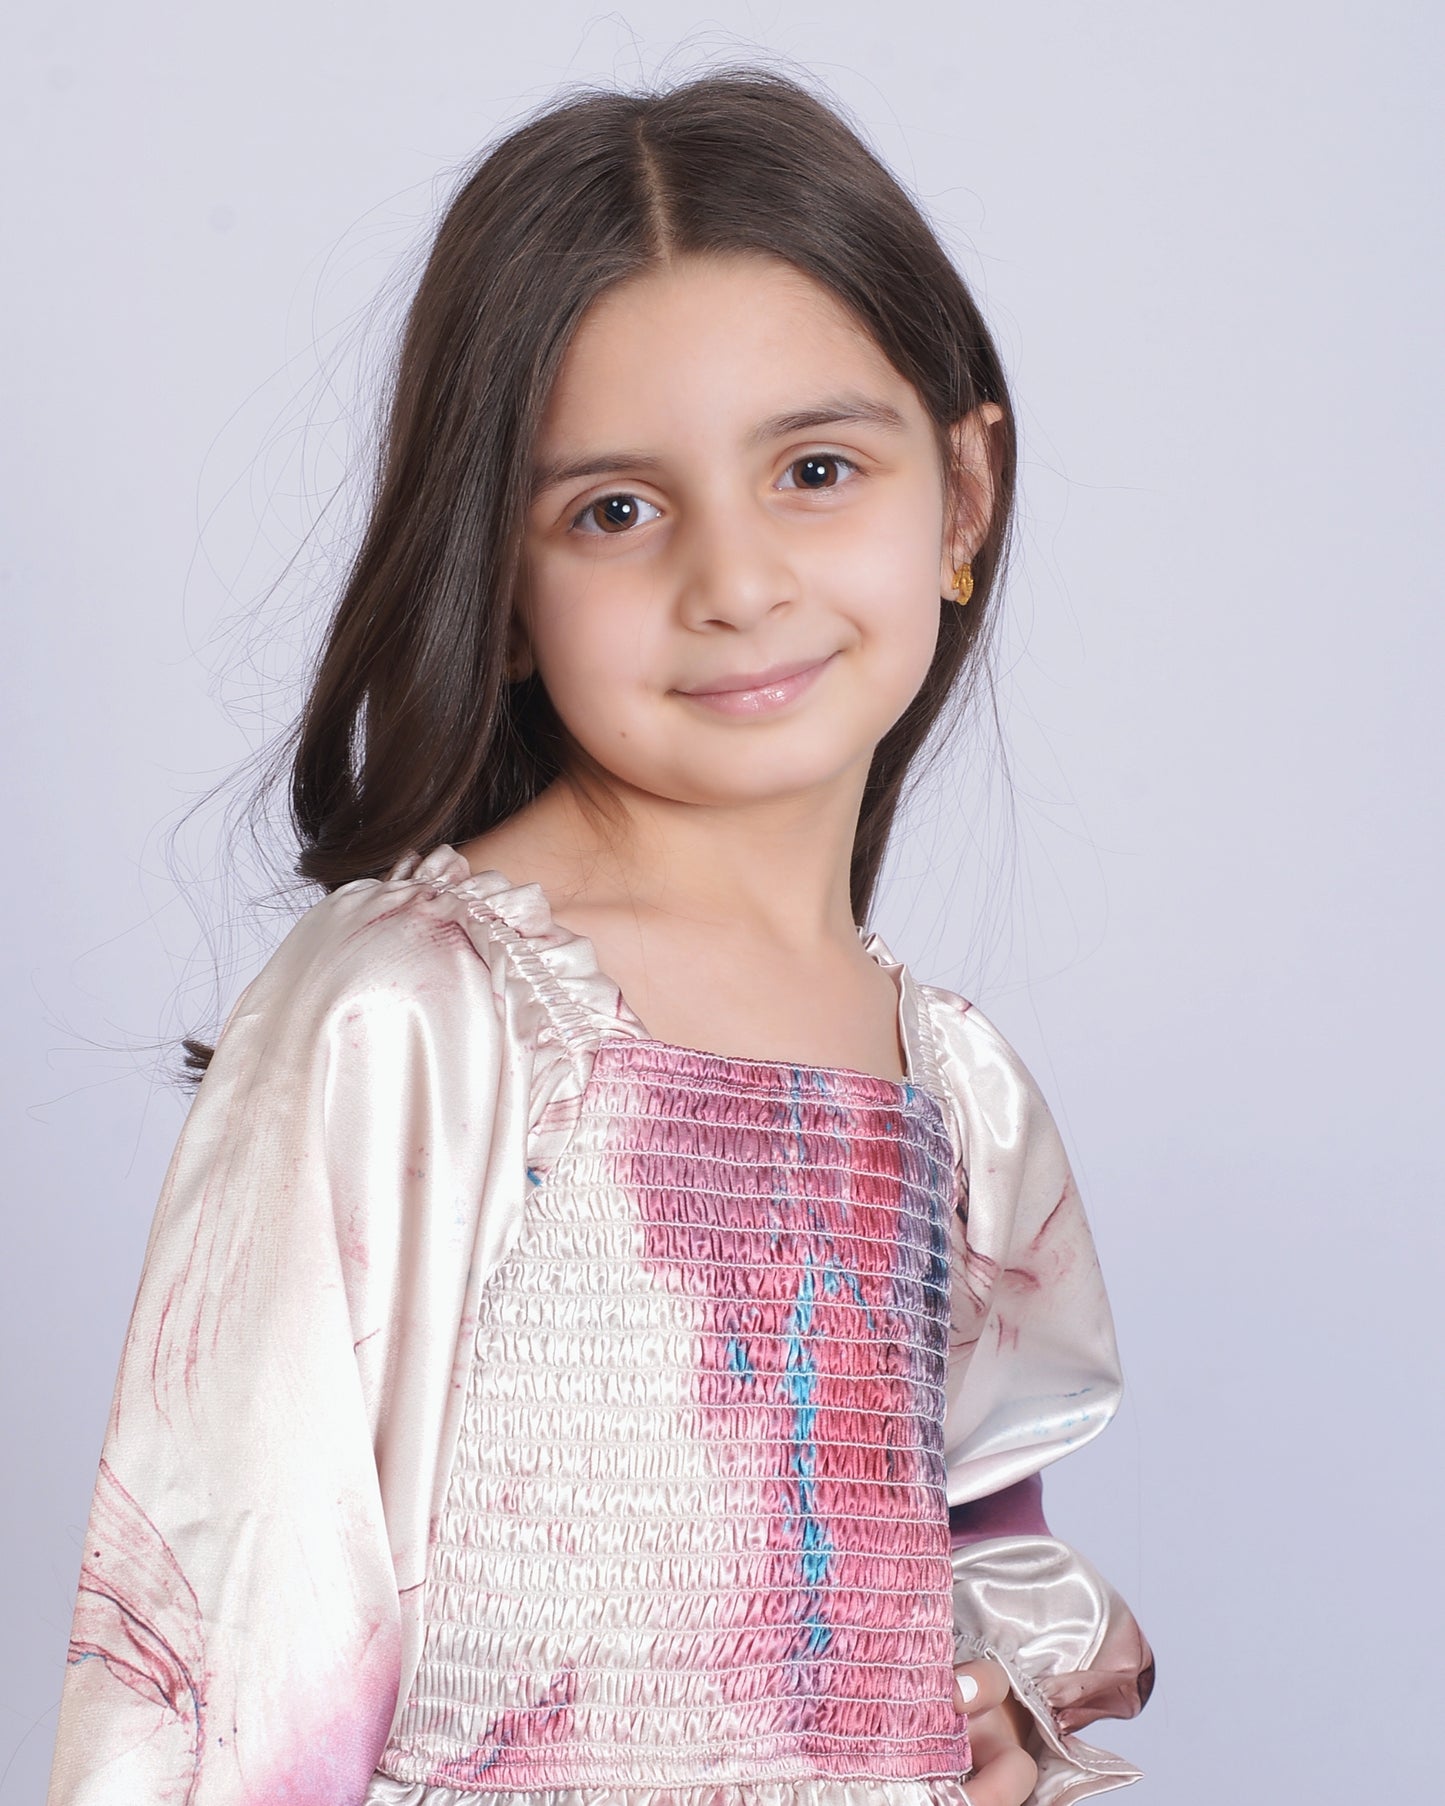 Elyanna Satin Dress (Mini)